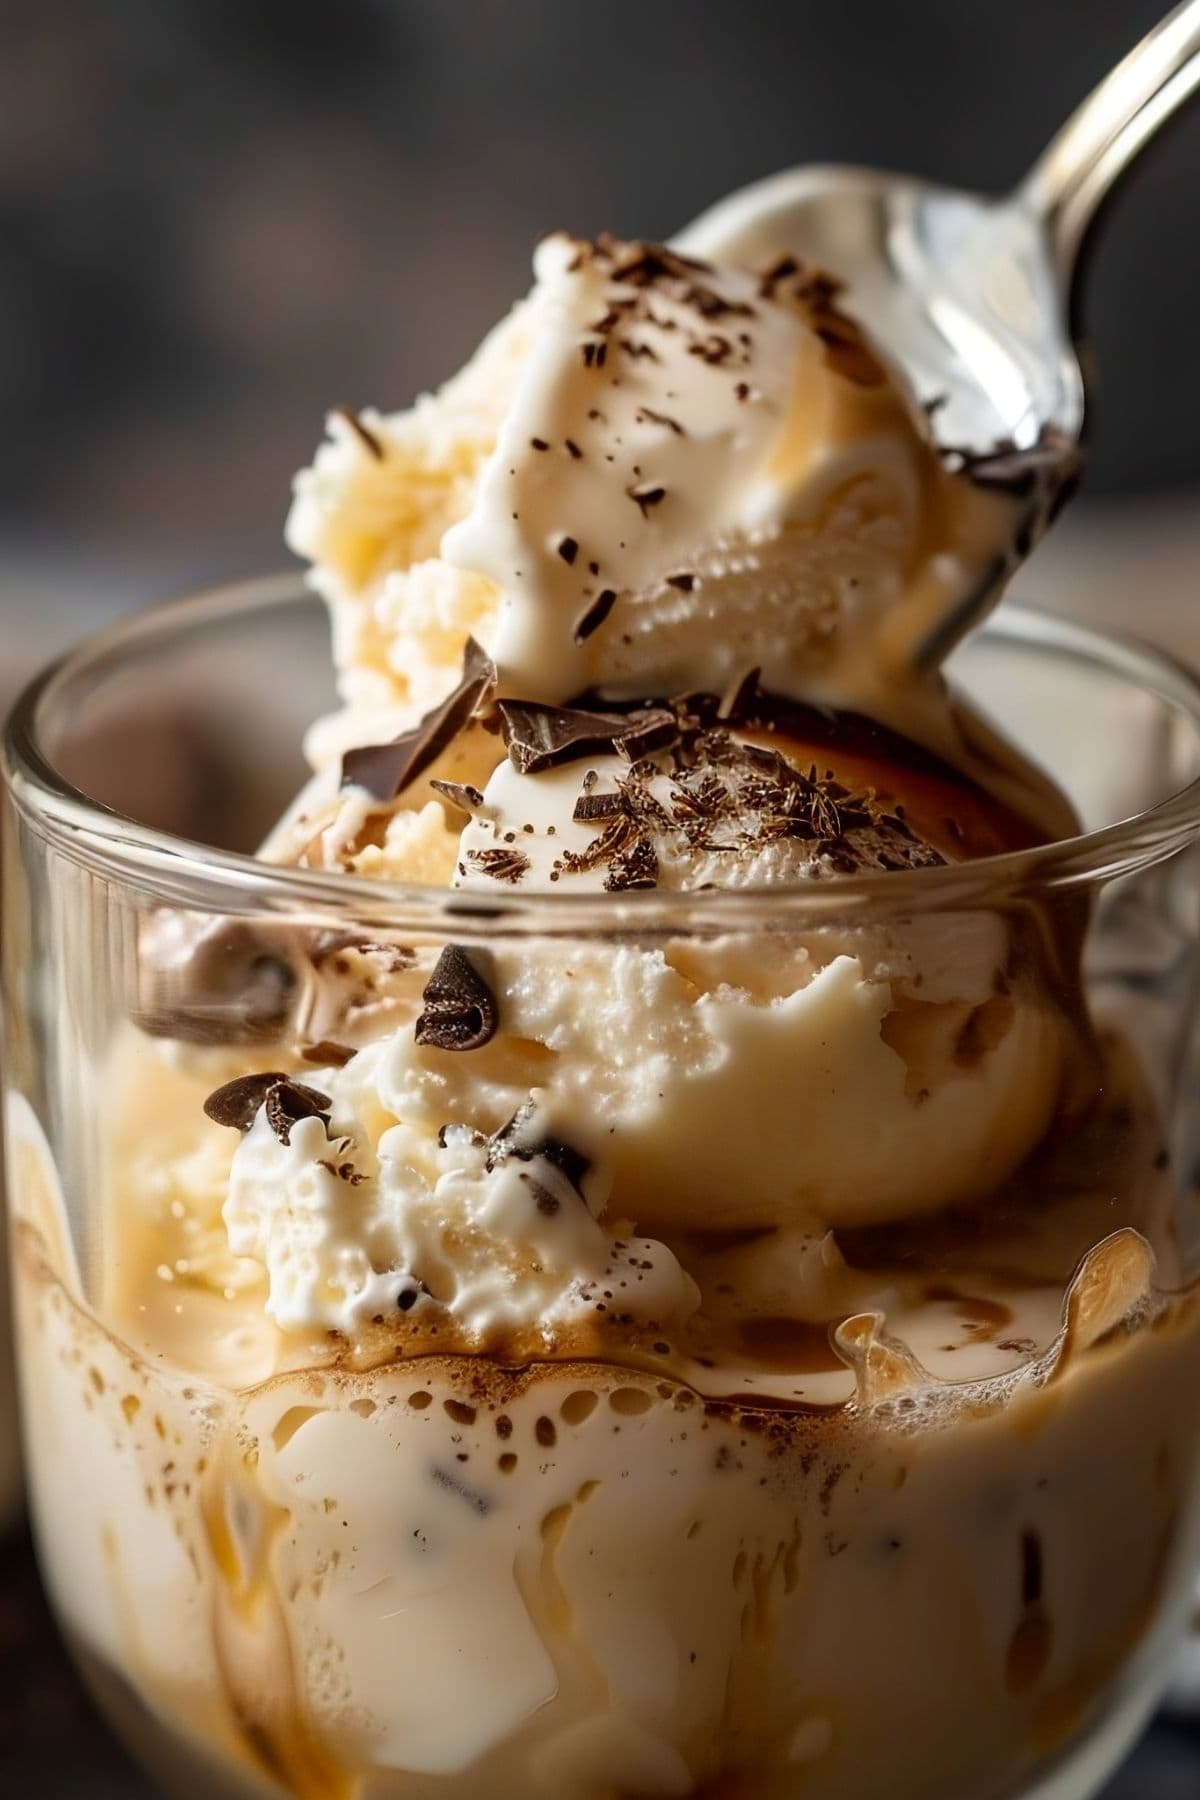 Affogato with Vanilla Ice Cream, Amaretto, and Espresso with Chocolate Shavings in a Glass with a Spoon Taking a Bite